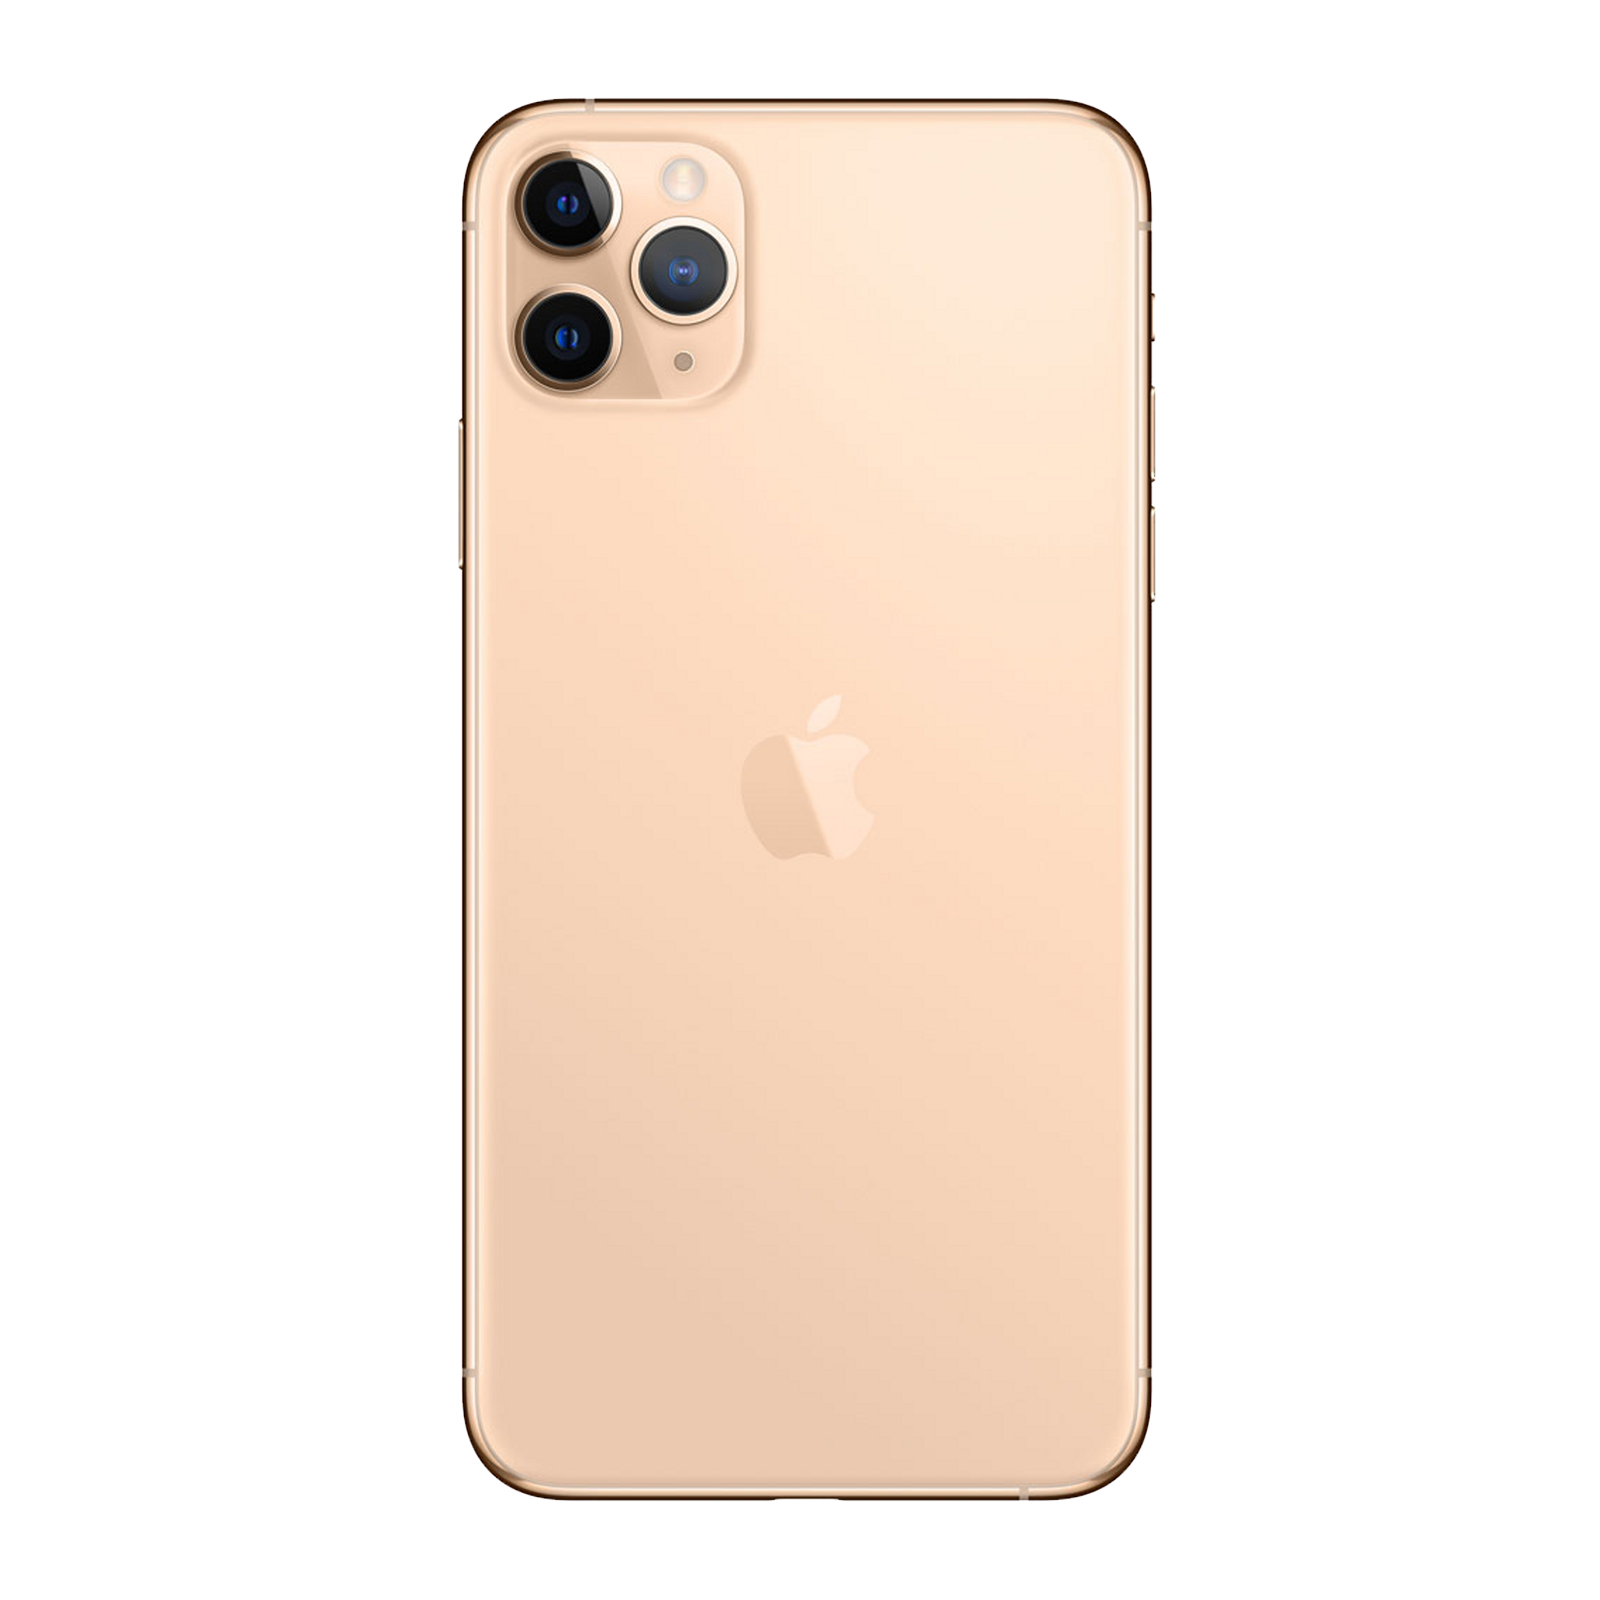 Apple iPhone 11 Pro Max 64GB Gold Good - Unlocked